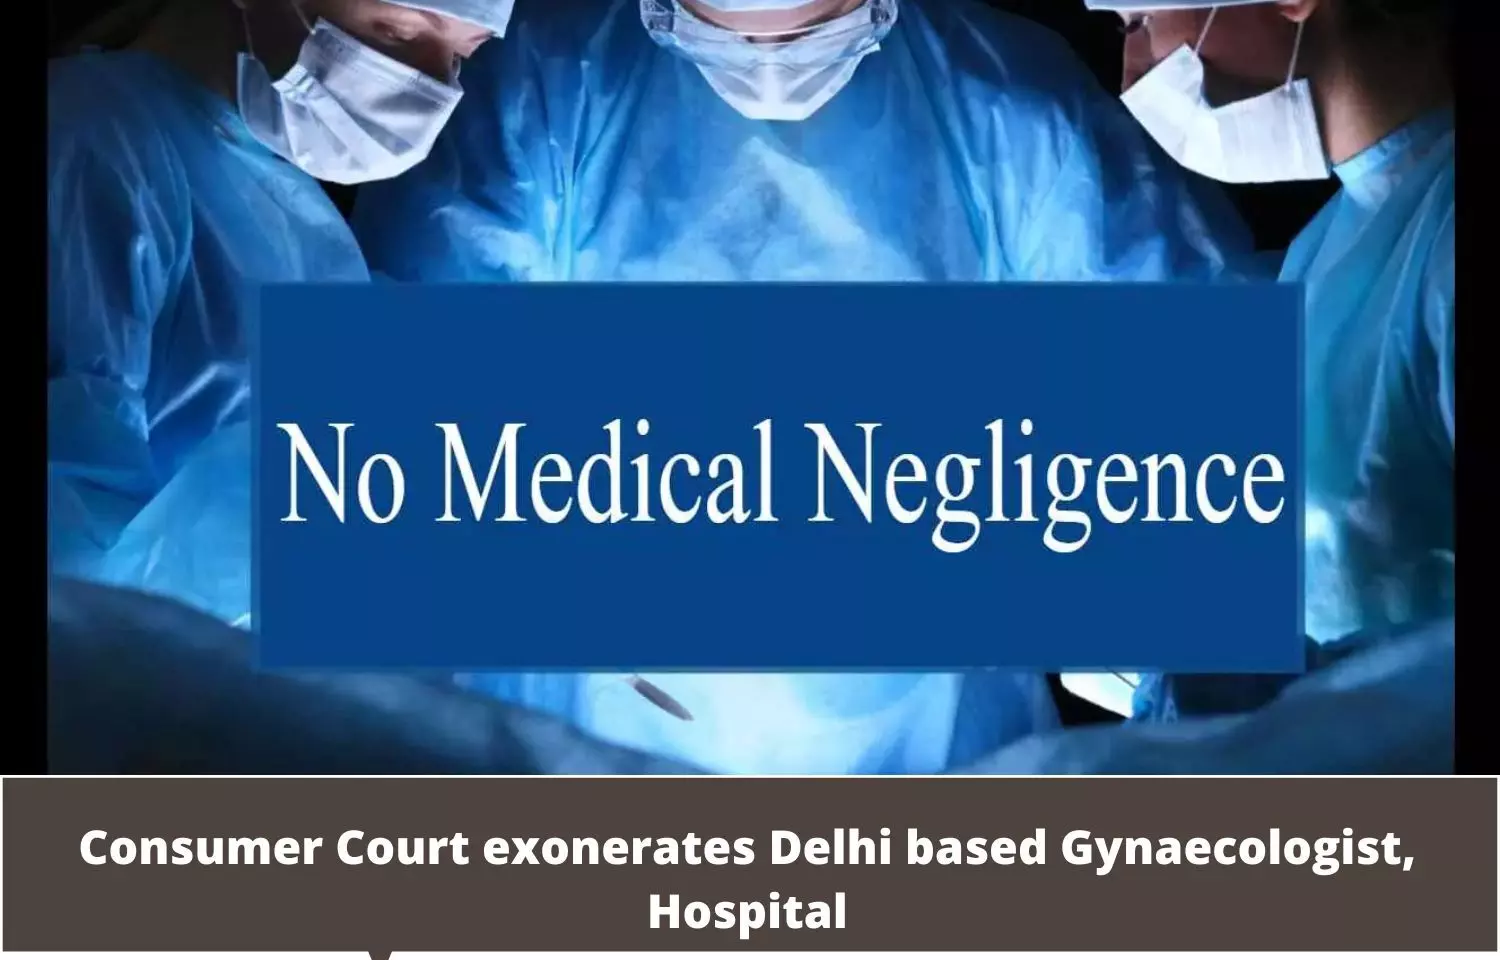 Failure of treatment not ground for negligence: Consumer Court exonerates Delhi based Gynaecologist, Hospital